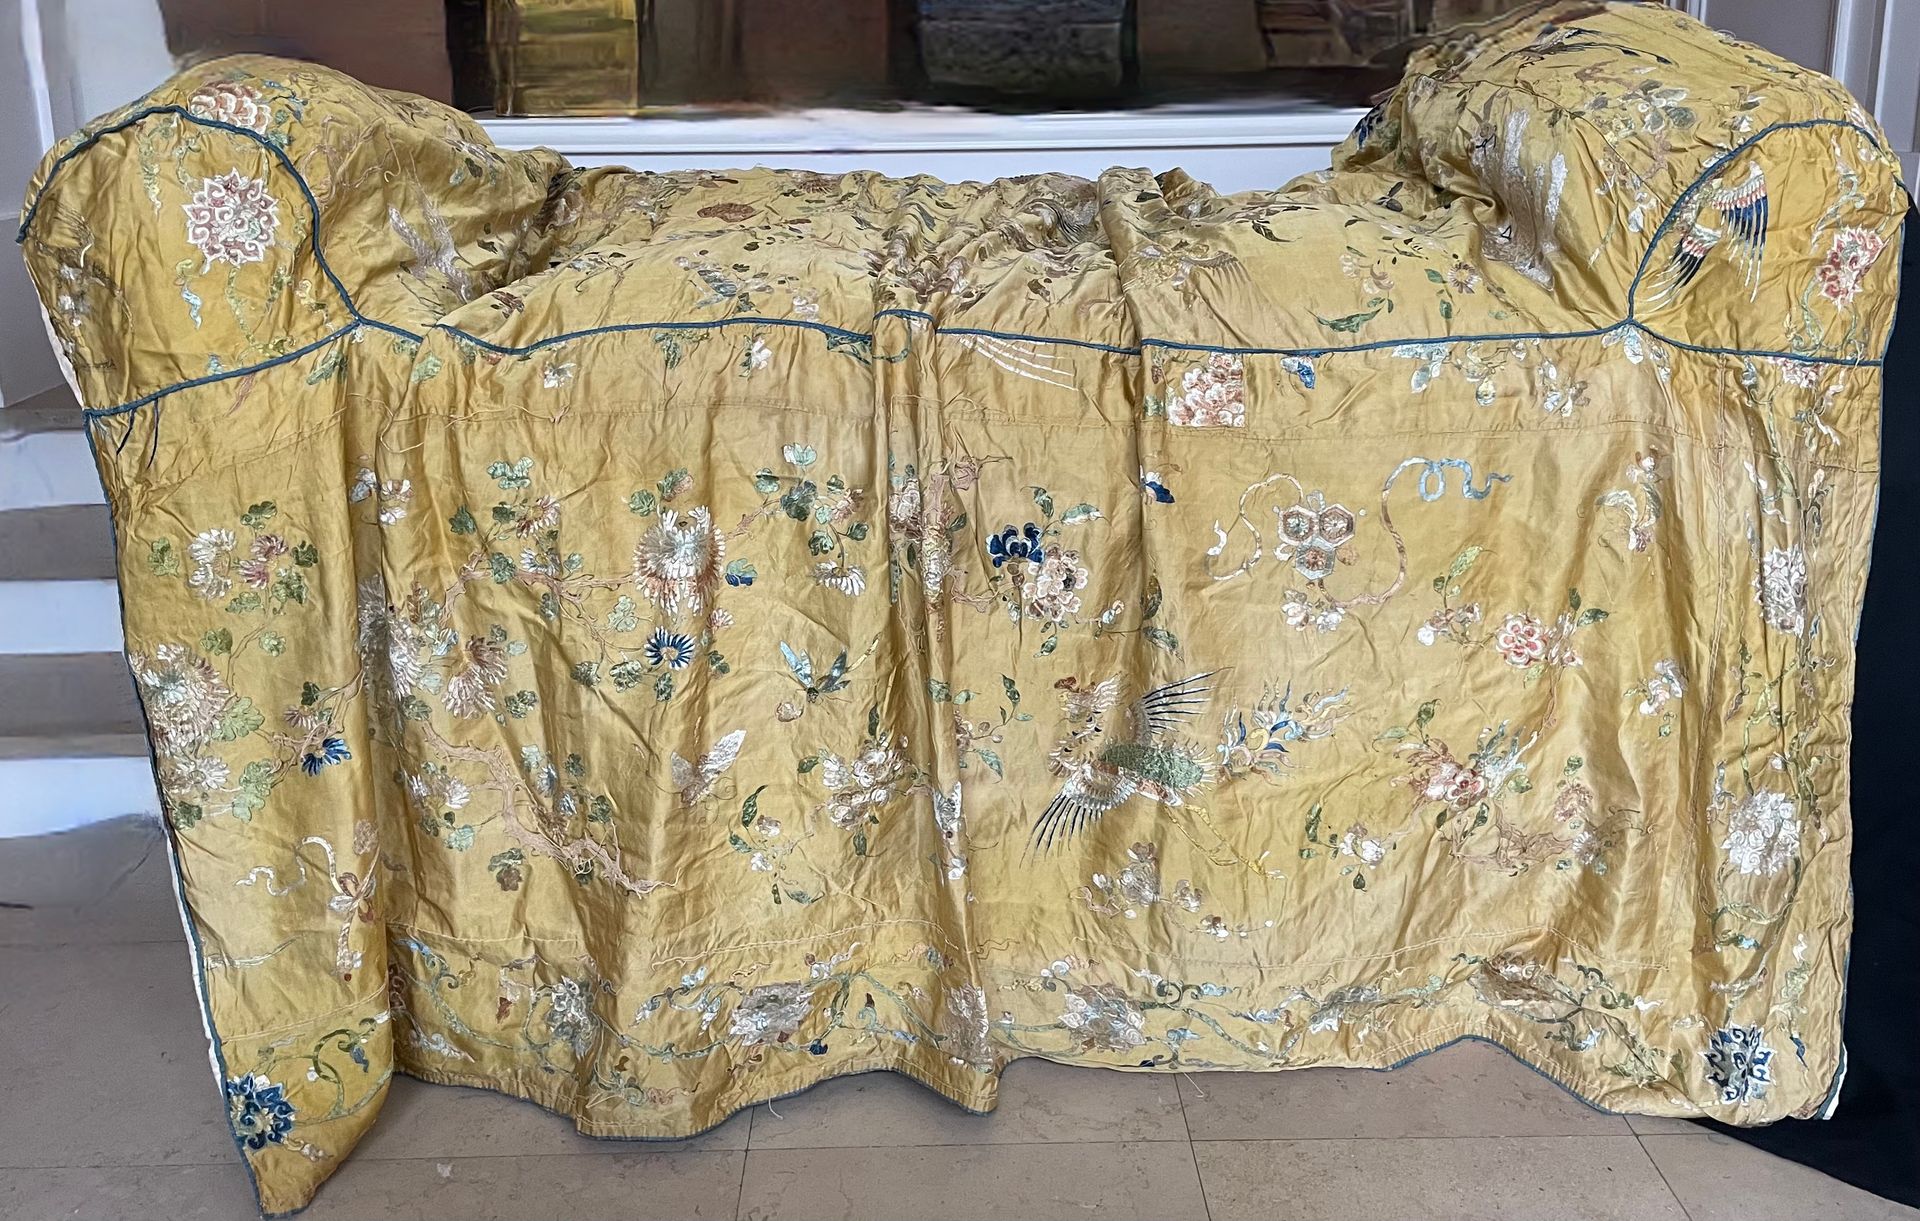 Null 双人长枕形状的被子，绣有异国情调的Chinoiseries，广州出口，中国，18世纪。
黄色丝缎，用绒毛丝和线绳绣出异国情调的兽皮和植物，包括菠萝和石&hellip;